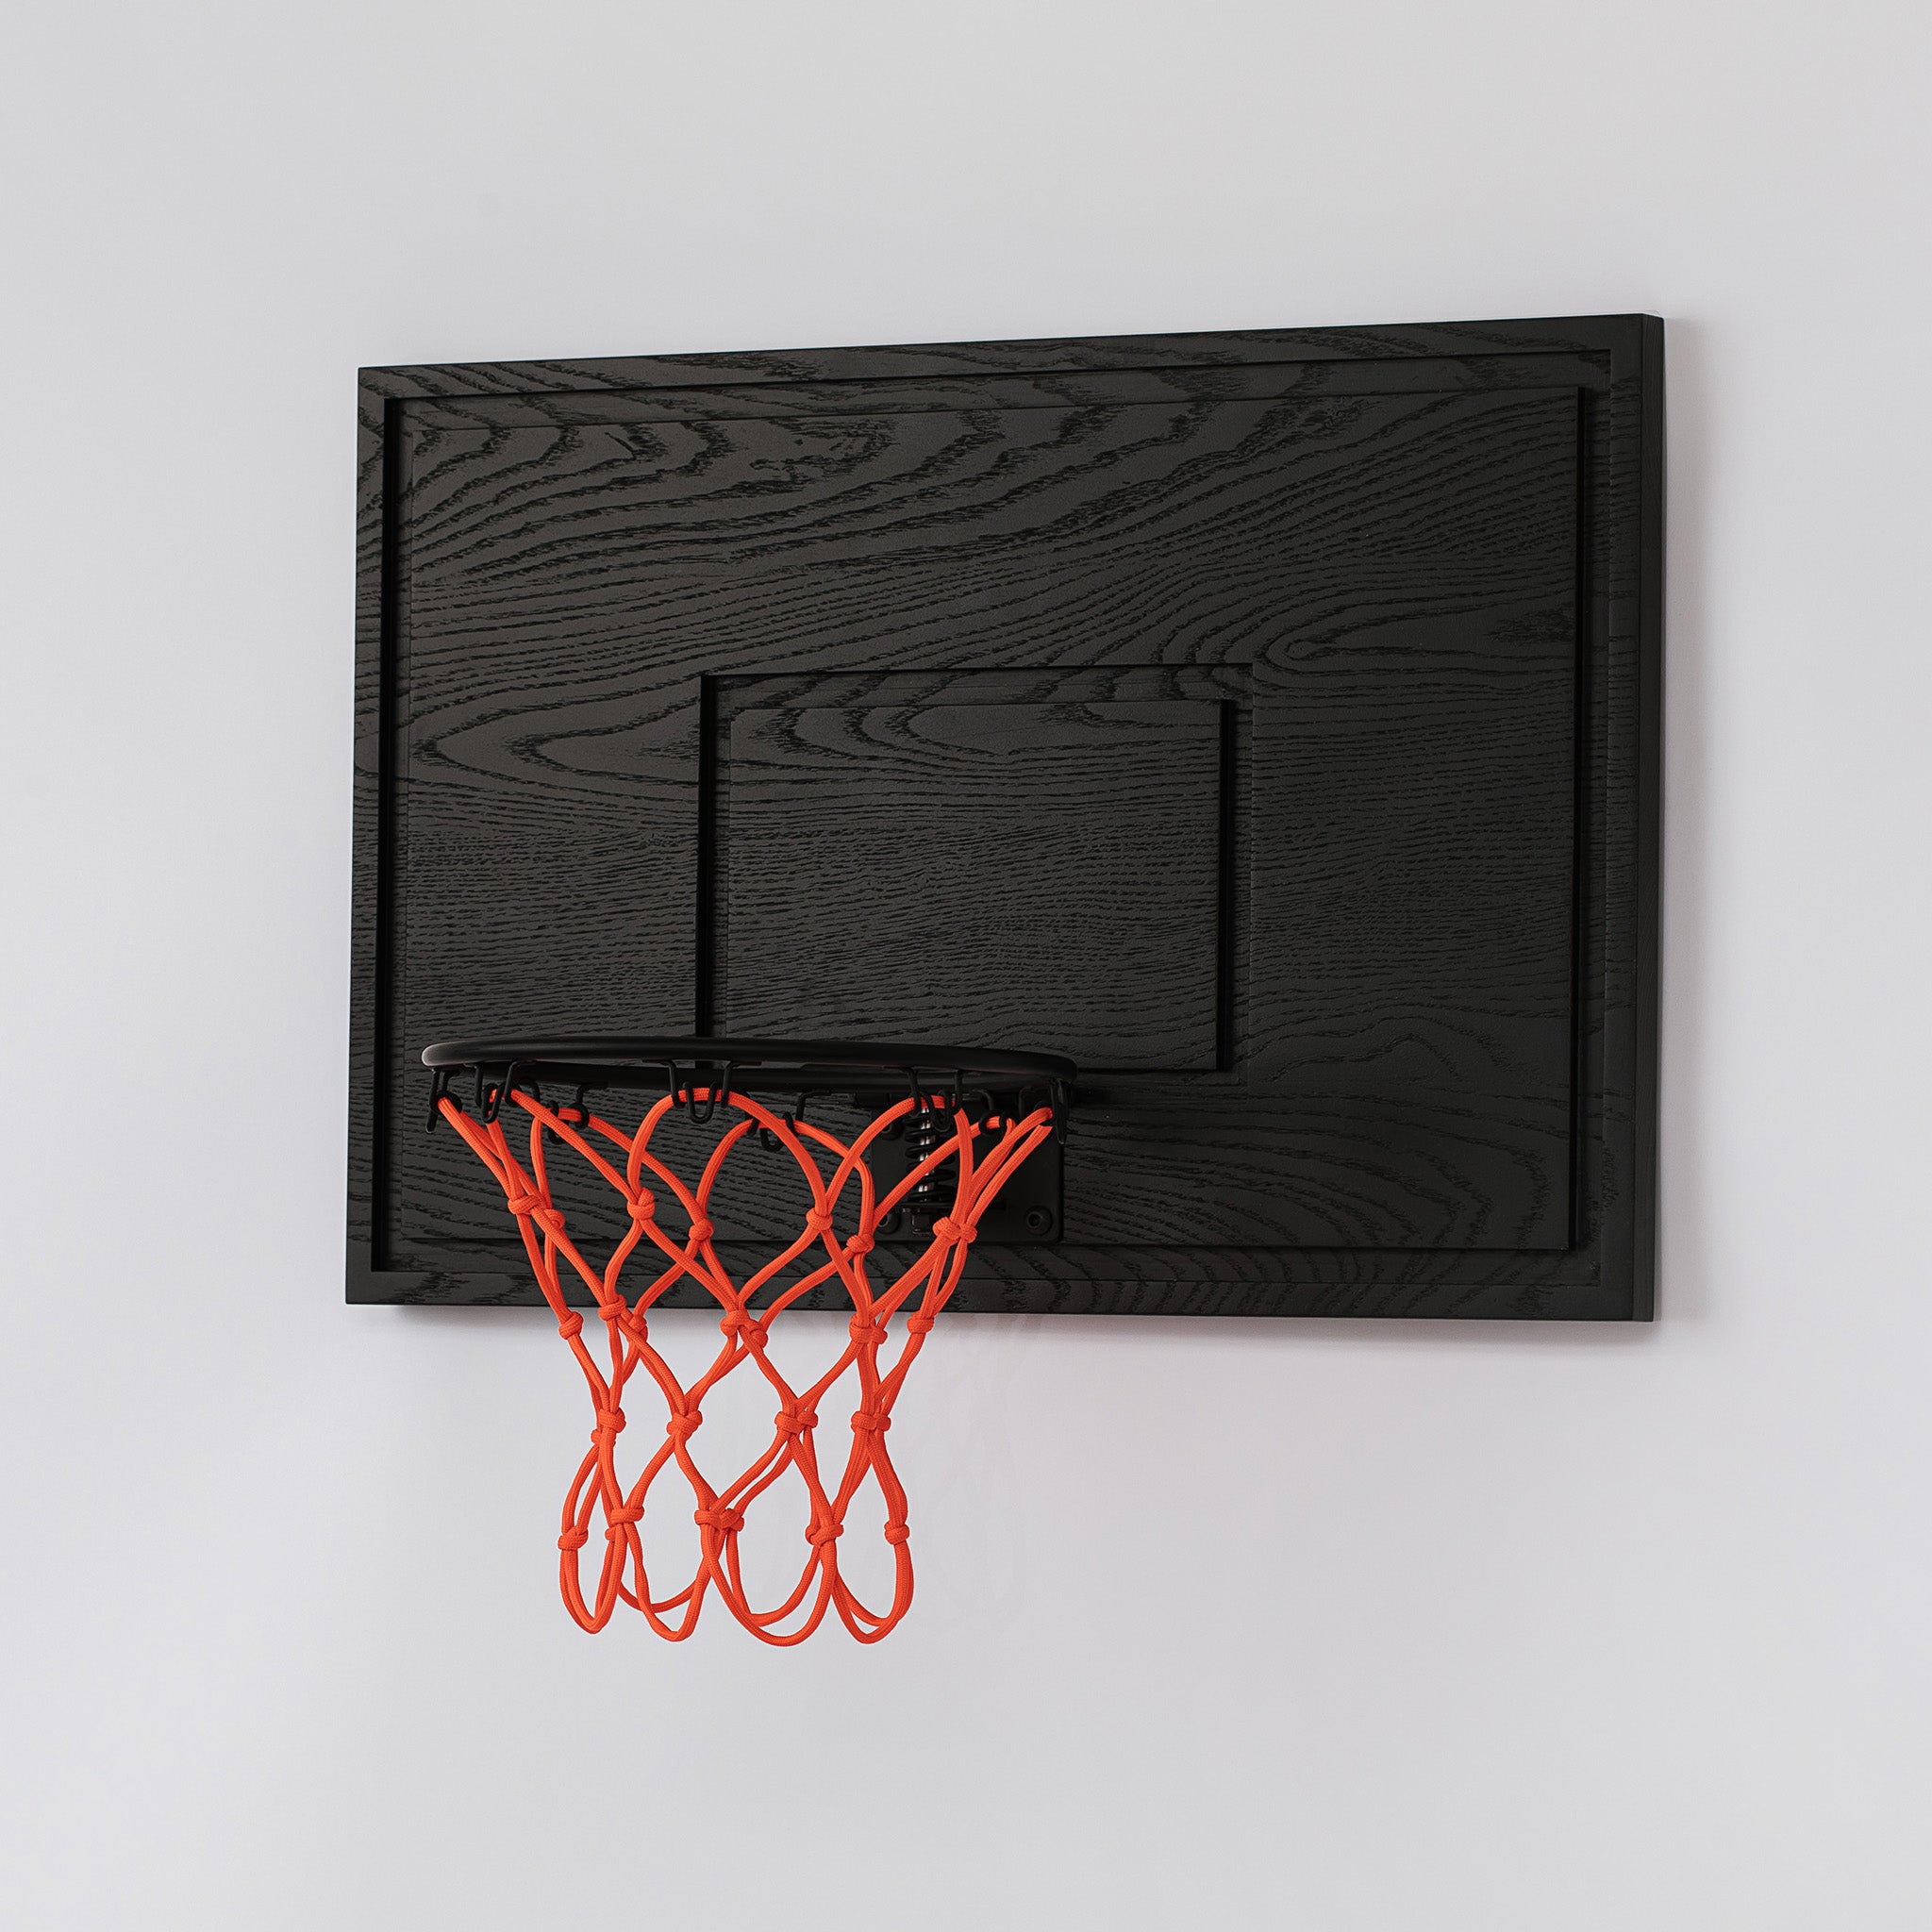 Black ash hardwood wall mounted mini basketball hoop with breakaway rim -black ash